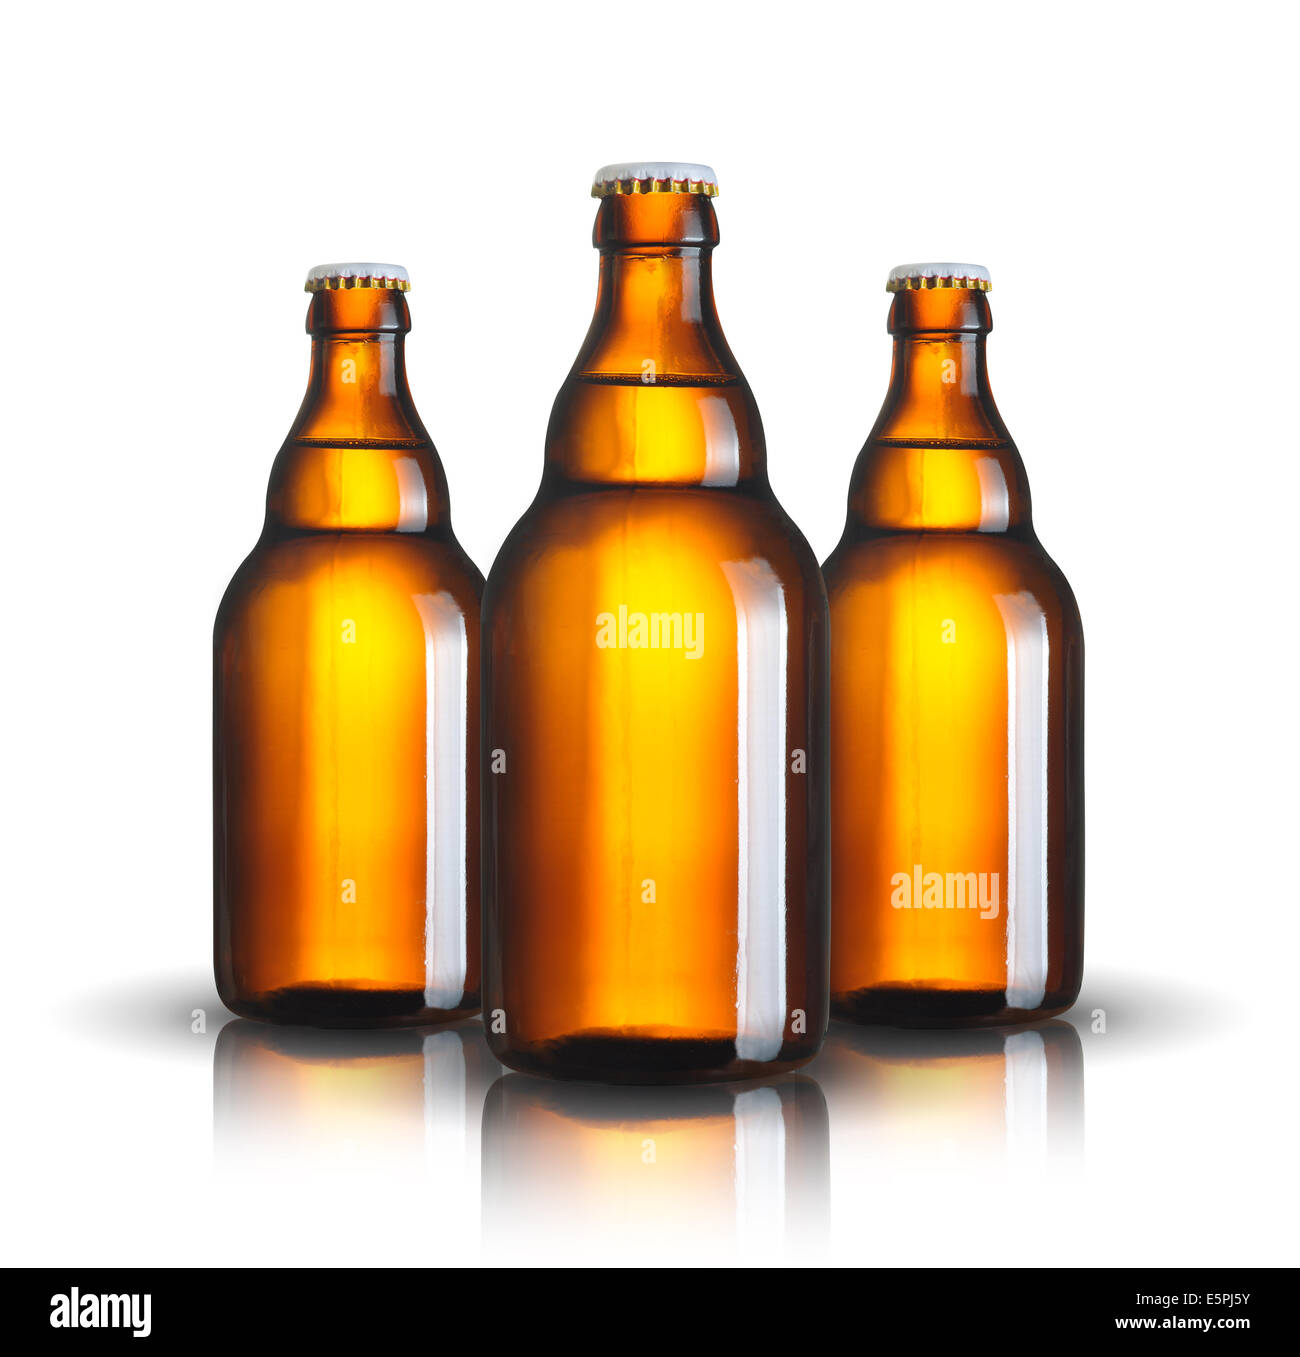 beer bottles isolated on white background Stock Photo